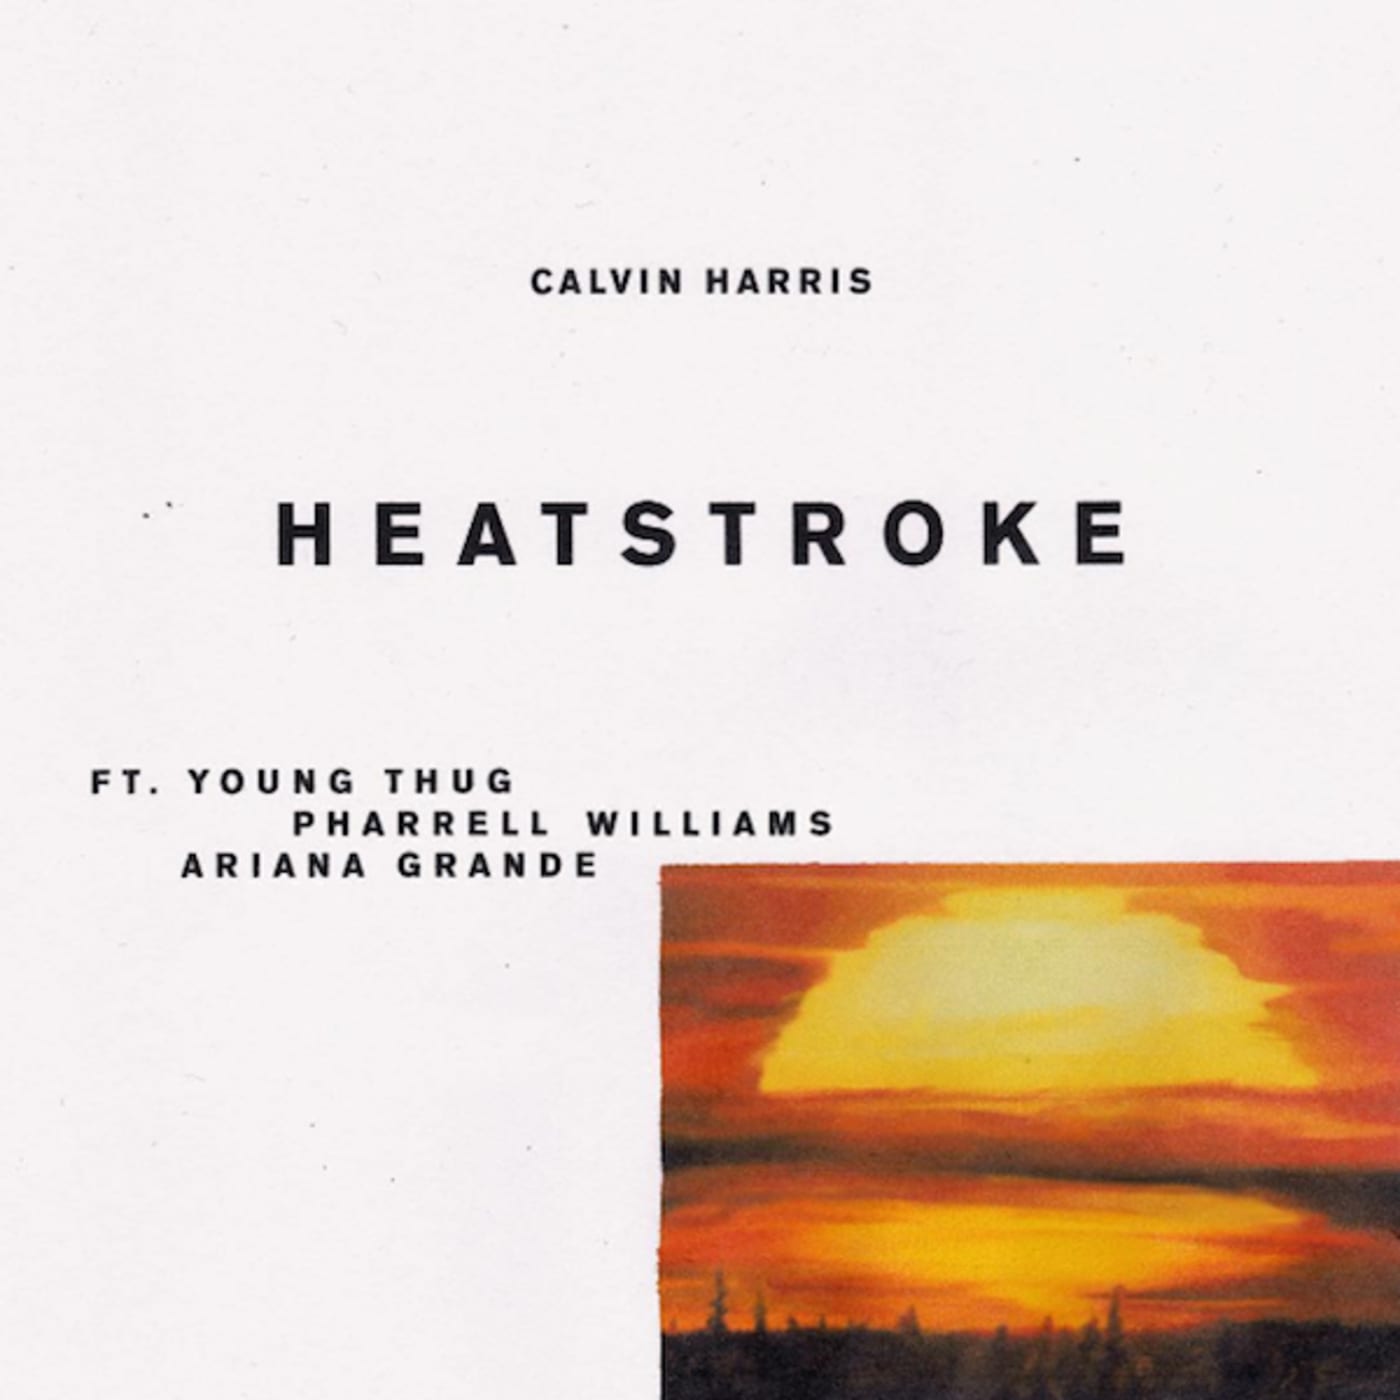 Calvin Harris "Heatstroke," f/ Ariana Grande, Young Thug, and Pharrell